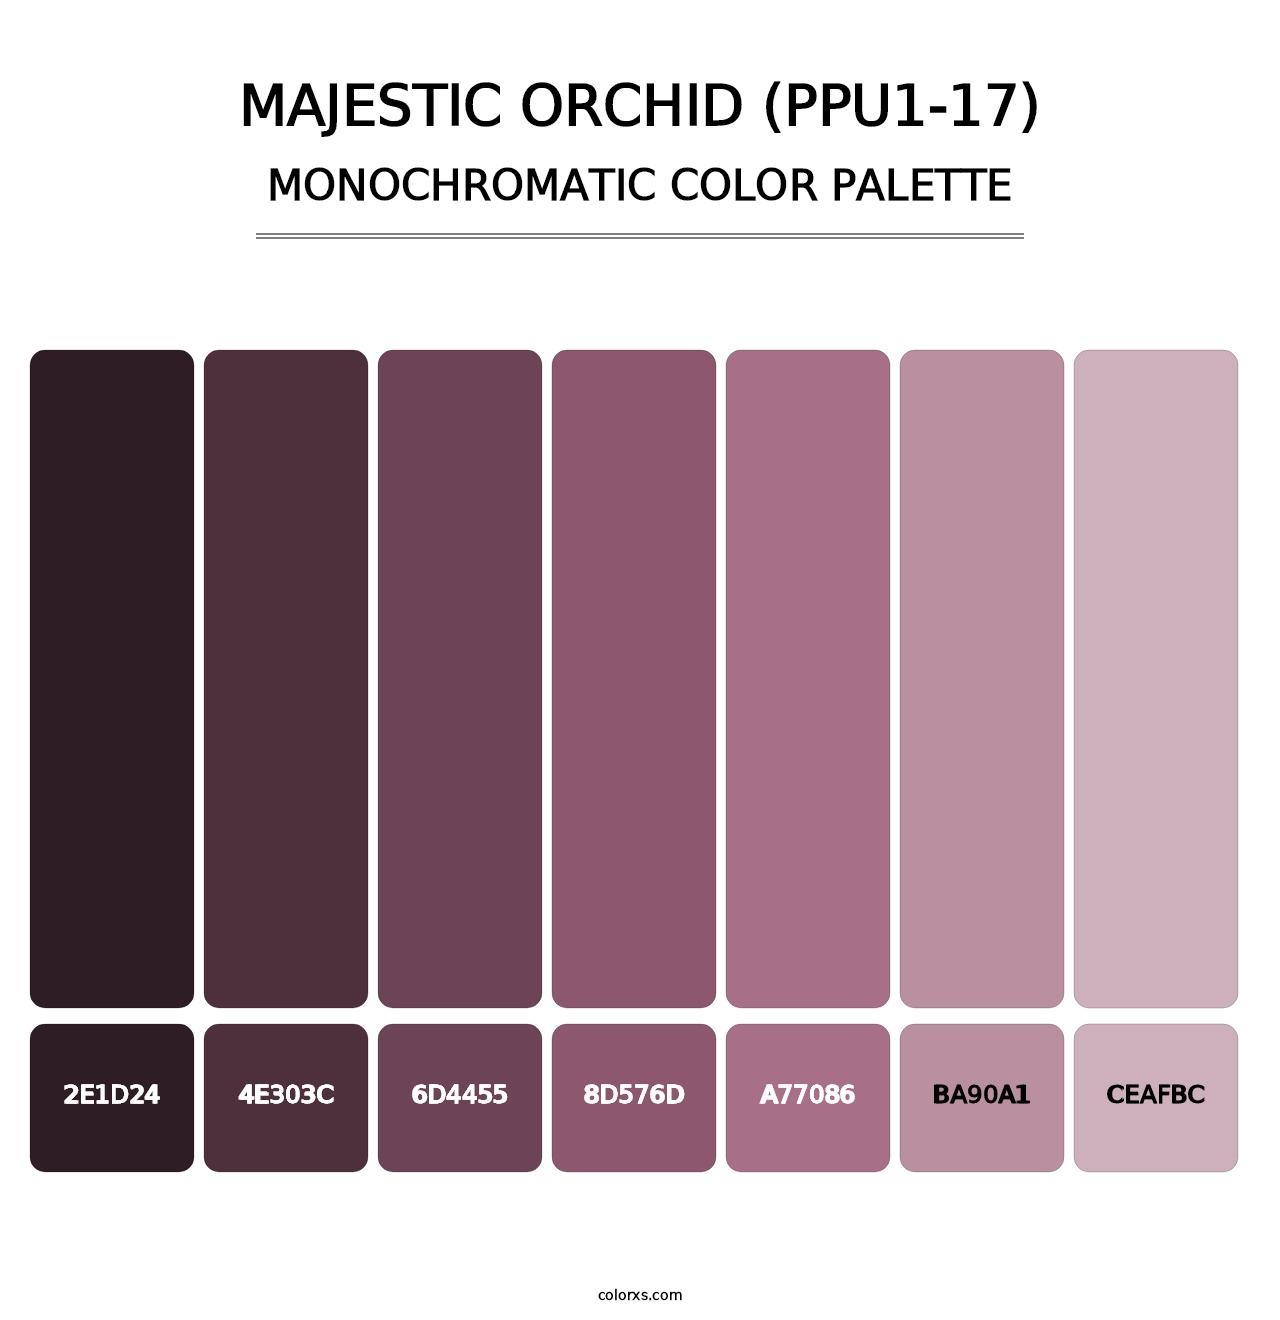 Majestic Orchid (PPU1-17) - Monochromatic Color Palette